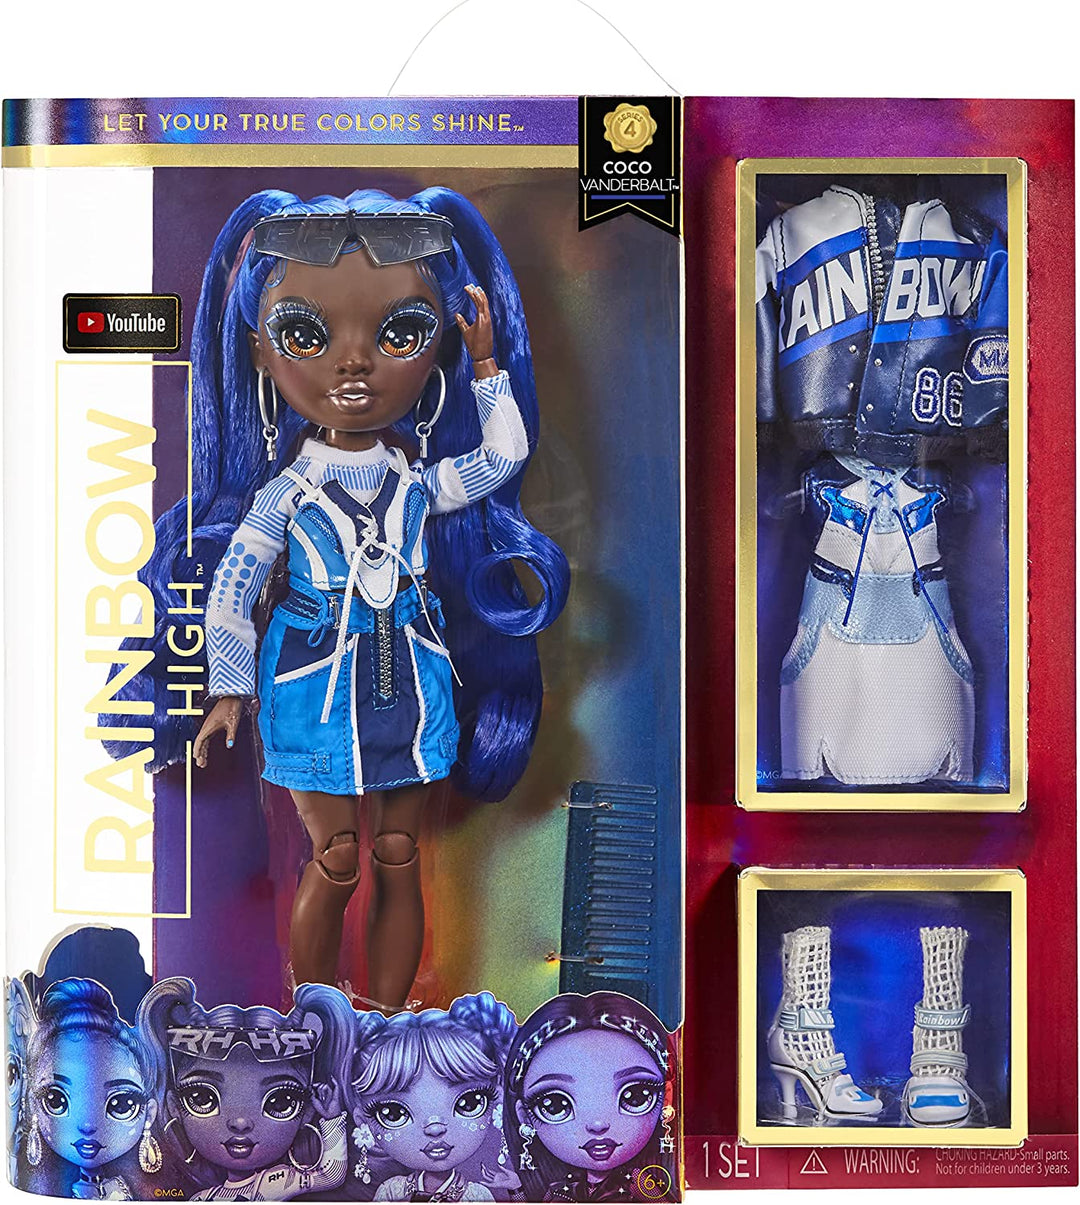 Rainbow High Coco Vanderbalt (Cobalt) Fashion Doll